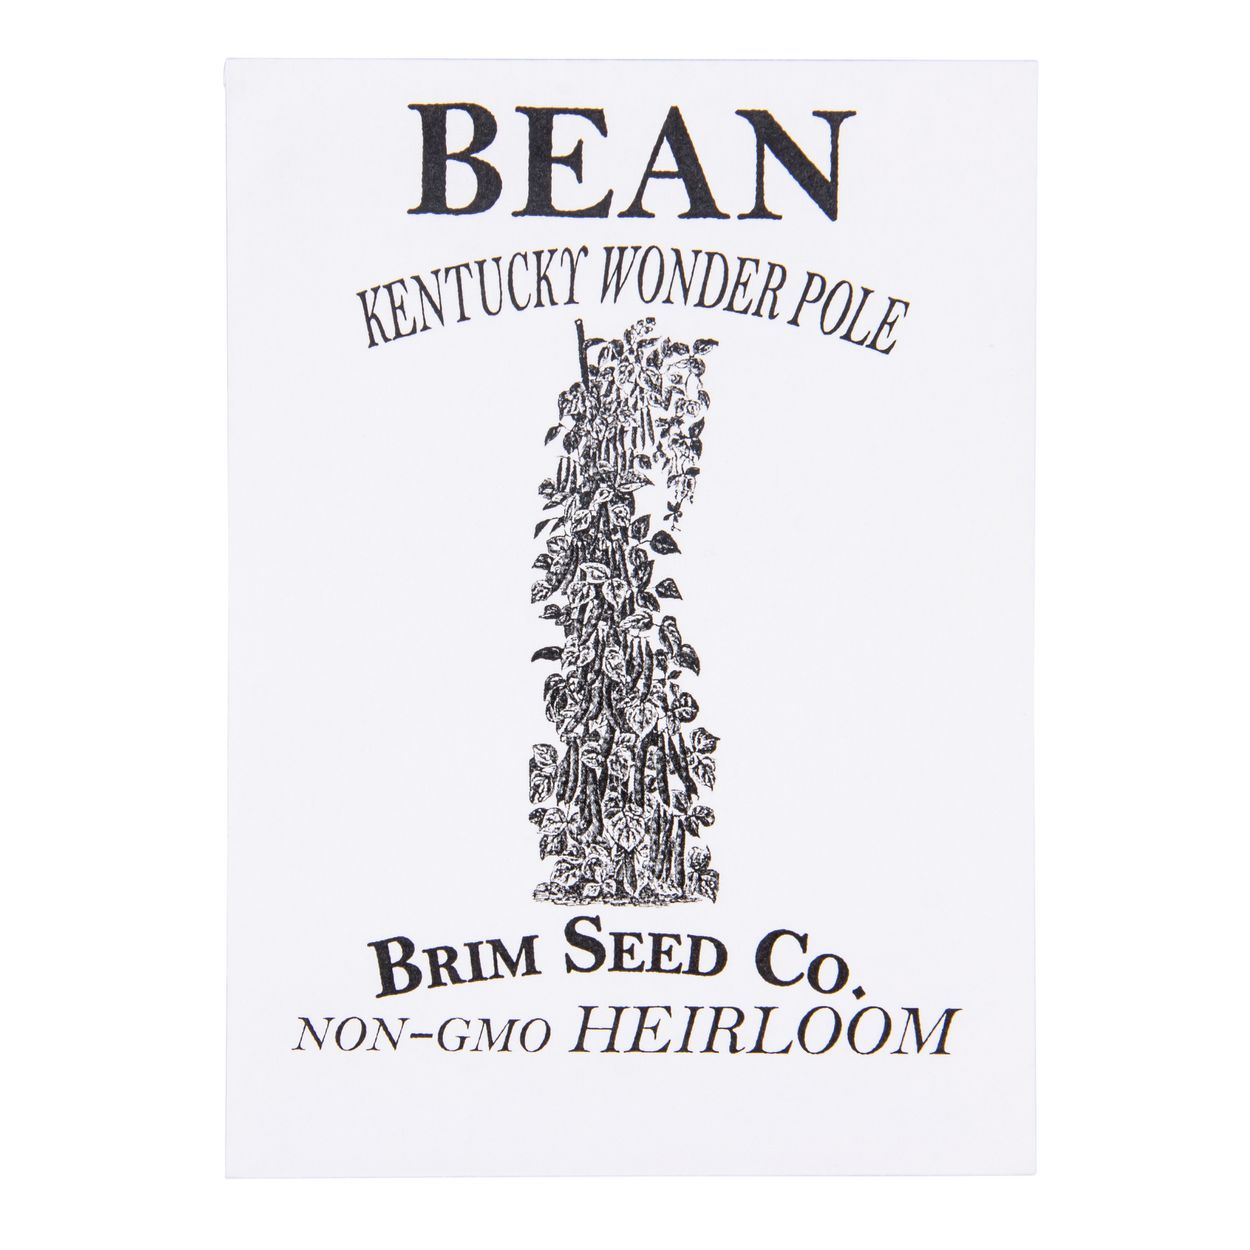 Brim Seed Co. - Kentucky Wonder Pole Bean Heirloom Seed